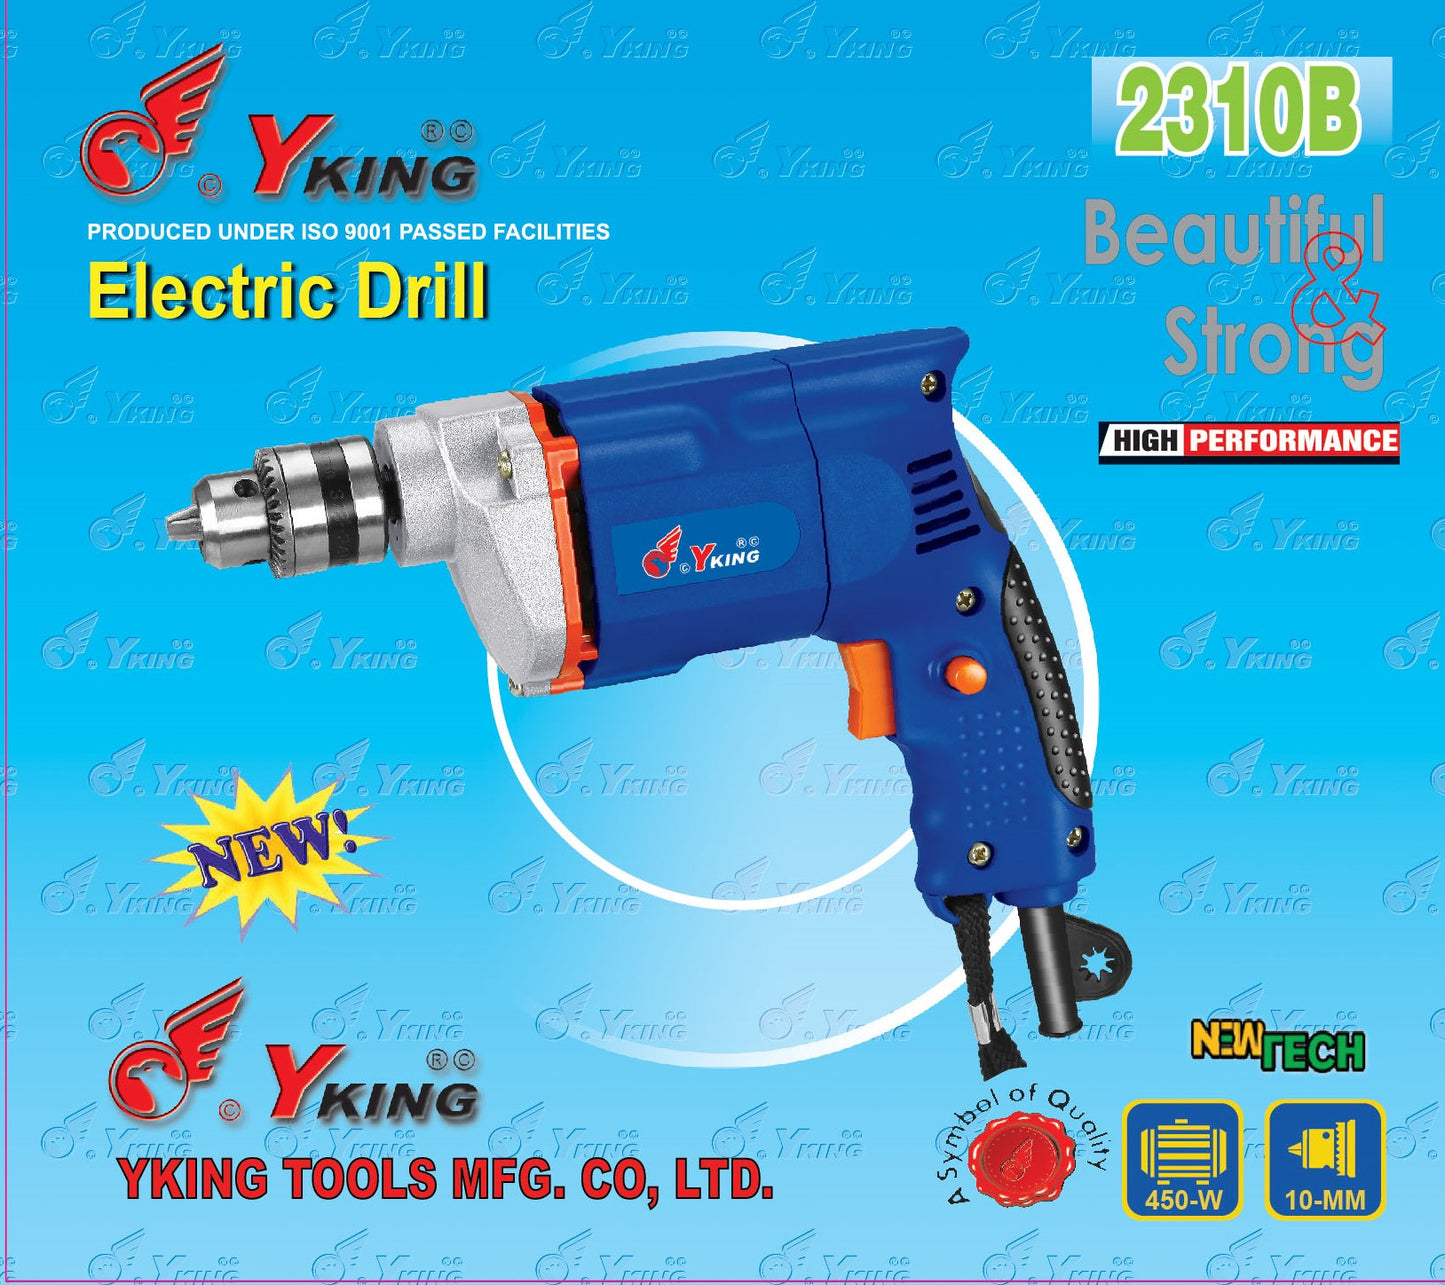 Yking Electric Drill - Model  2310-B